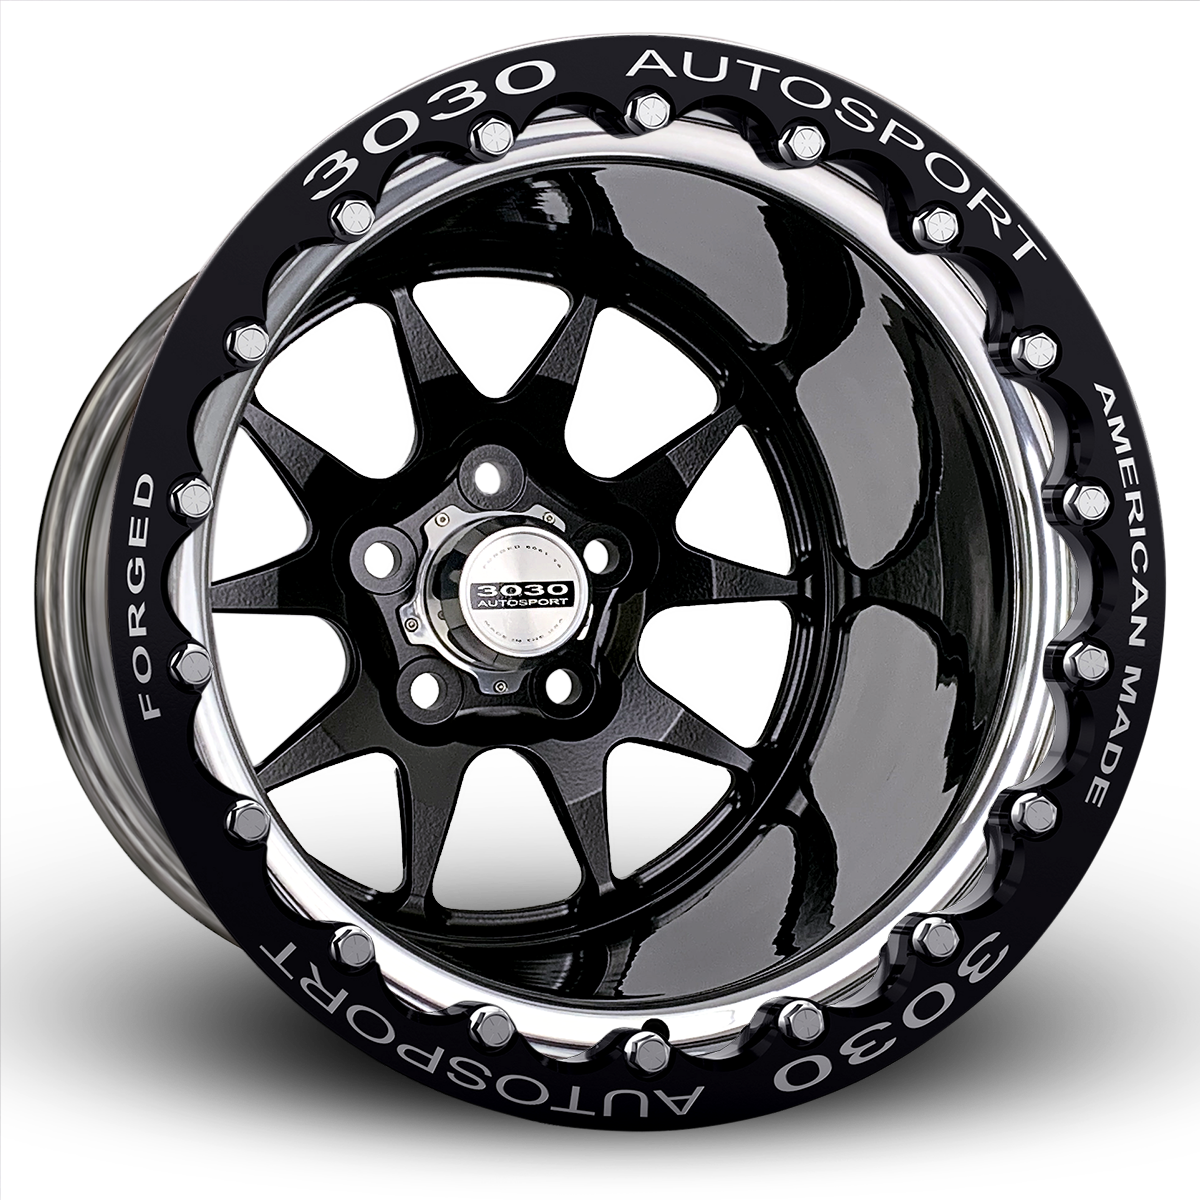 MACH-10 Double-Beadlock Wheel, Size: 15x14", Bolt Pattern: 5x4.5", Backspace: 5" [Black/Polished]